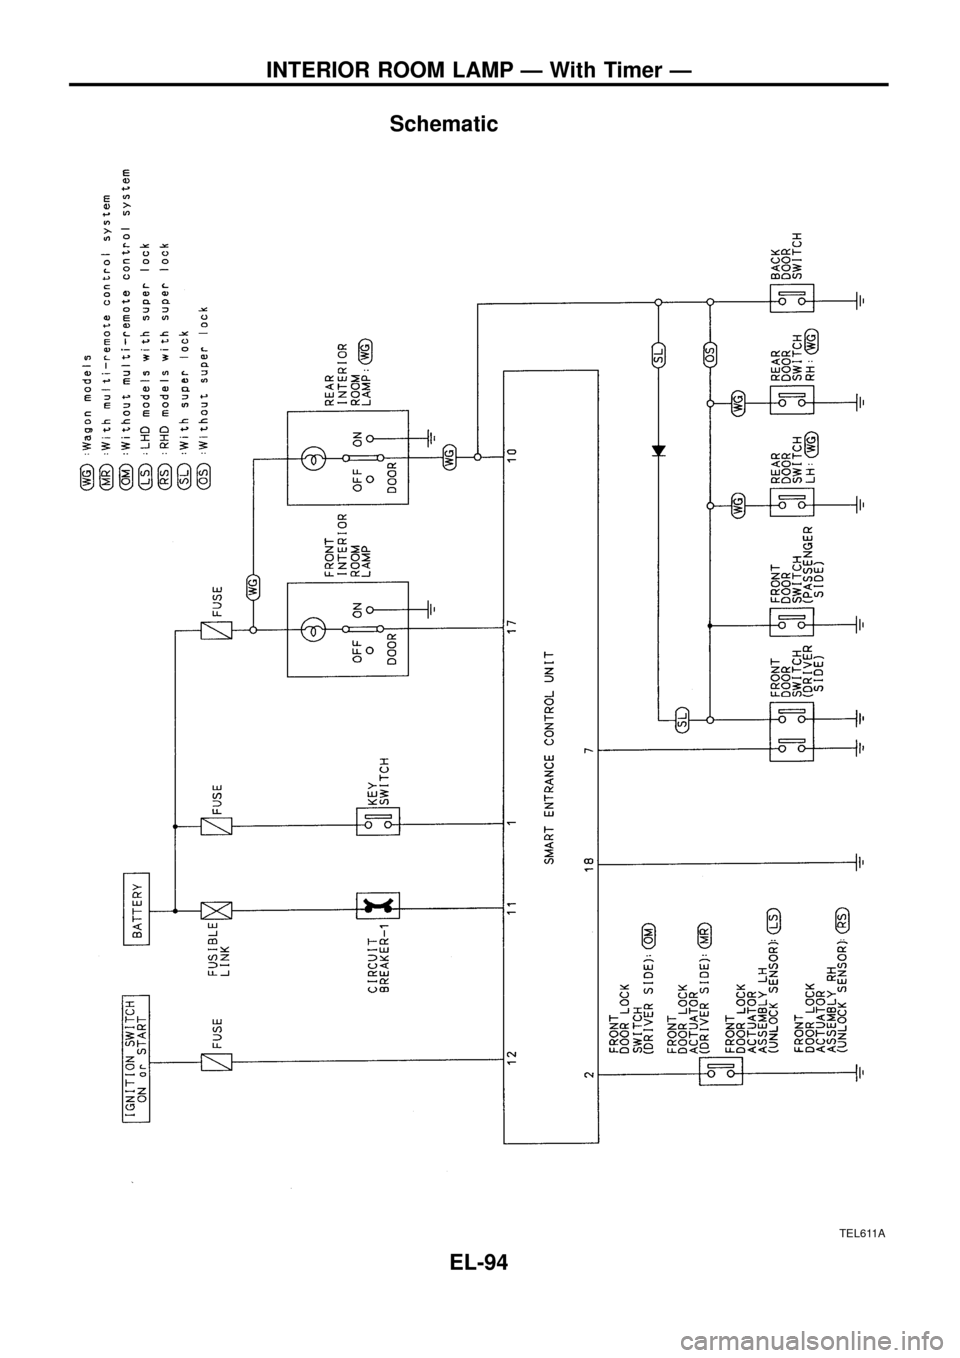 NISSAN PATROL 1998 Y61 / 5.G Electrical System Workshop Manual Schematic
TEL611A
INTERIOR ROOM LAMP Ð With Timer Ð
EL-94 